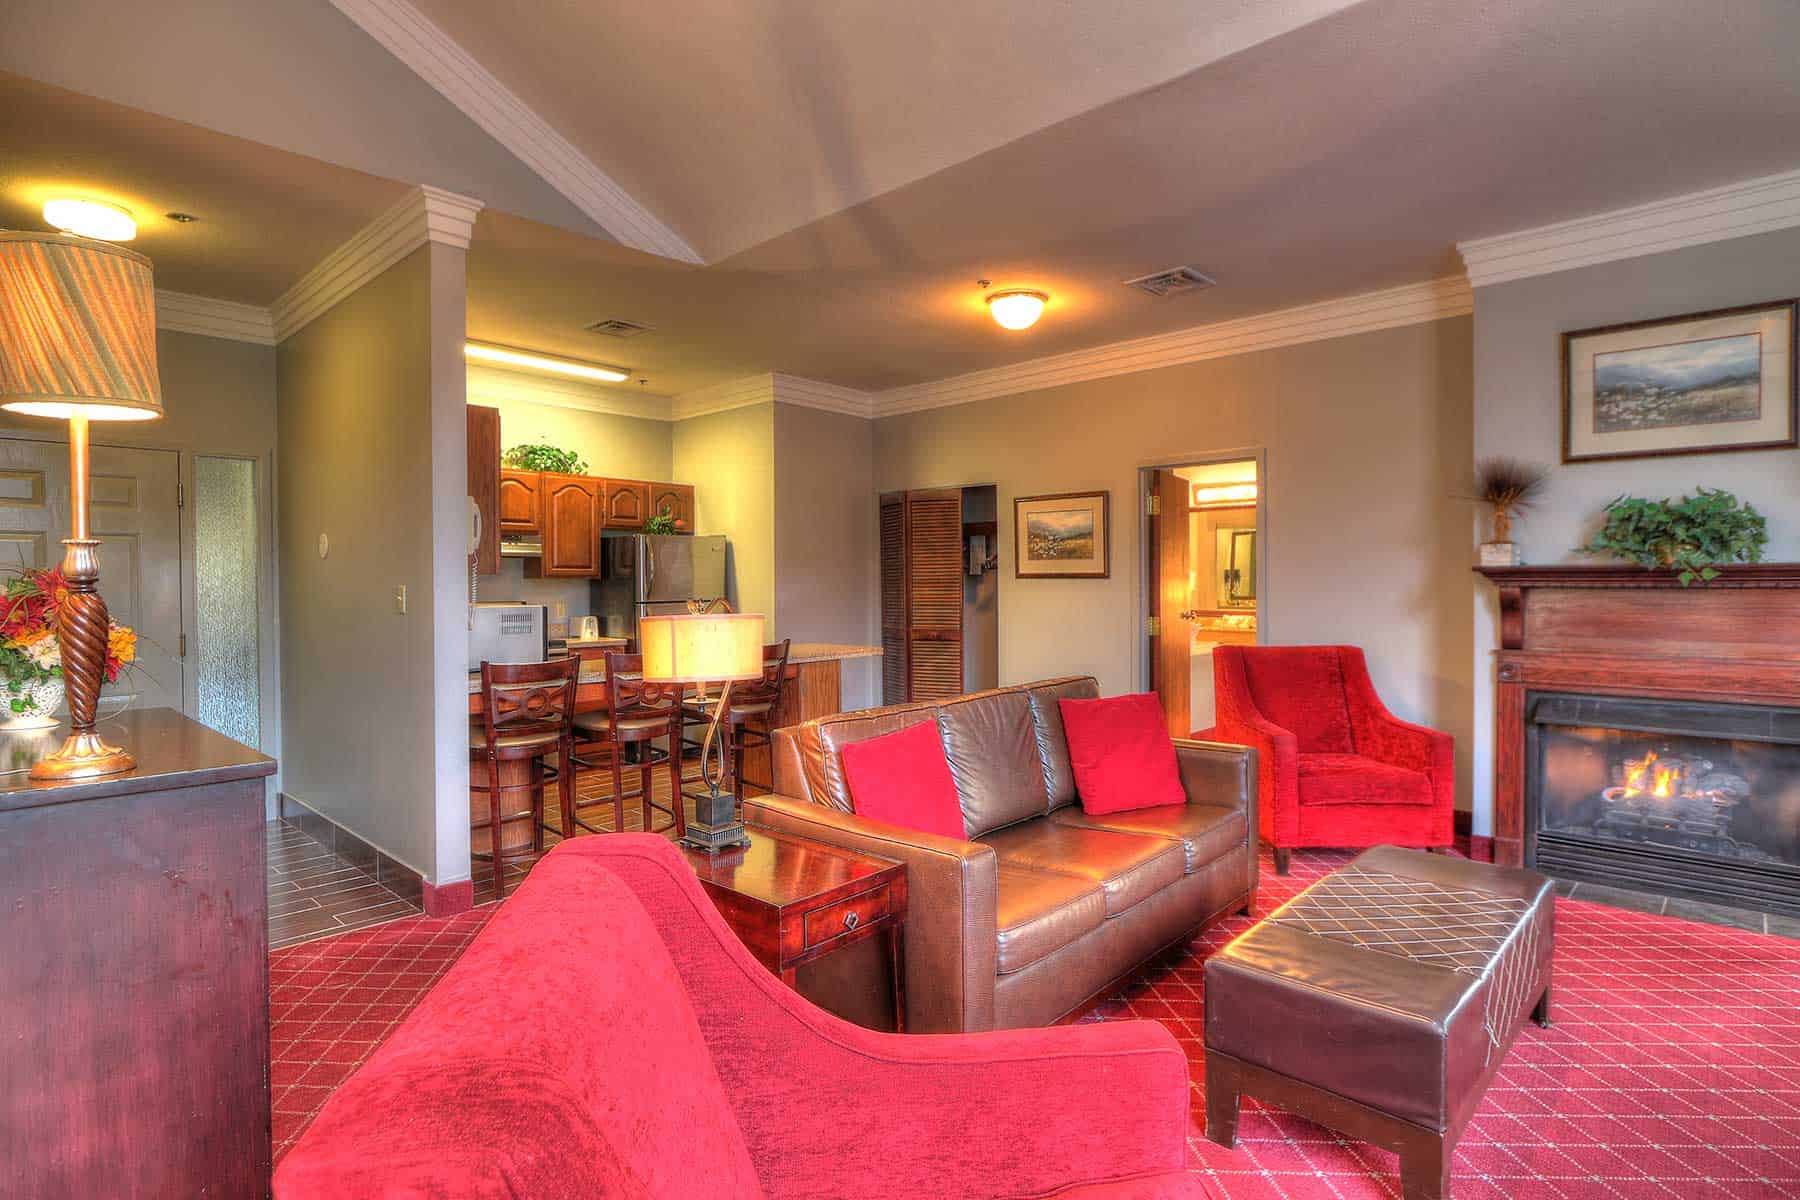 Beautiful photo of living area of penthouse suite in Gatlinburg TN hotel